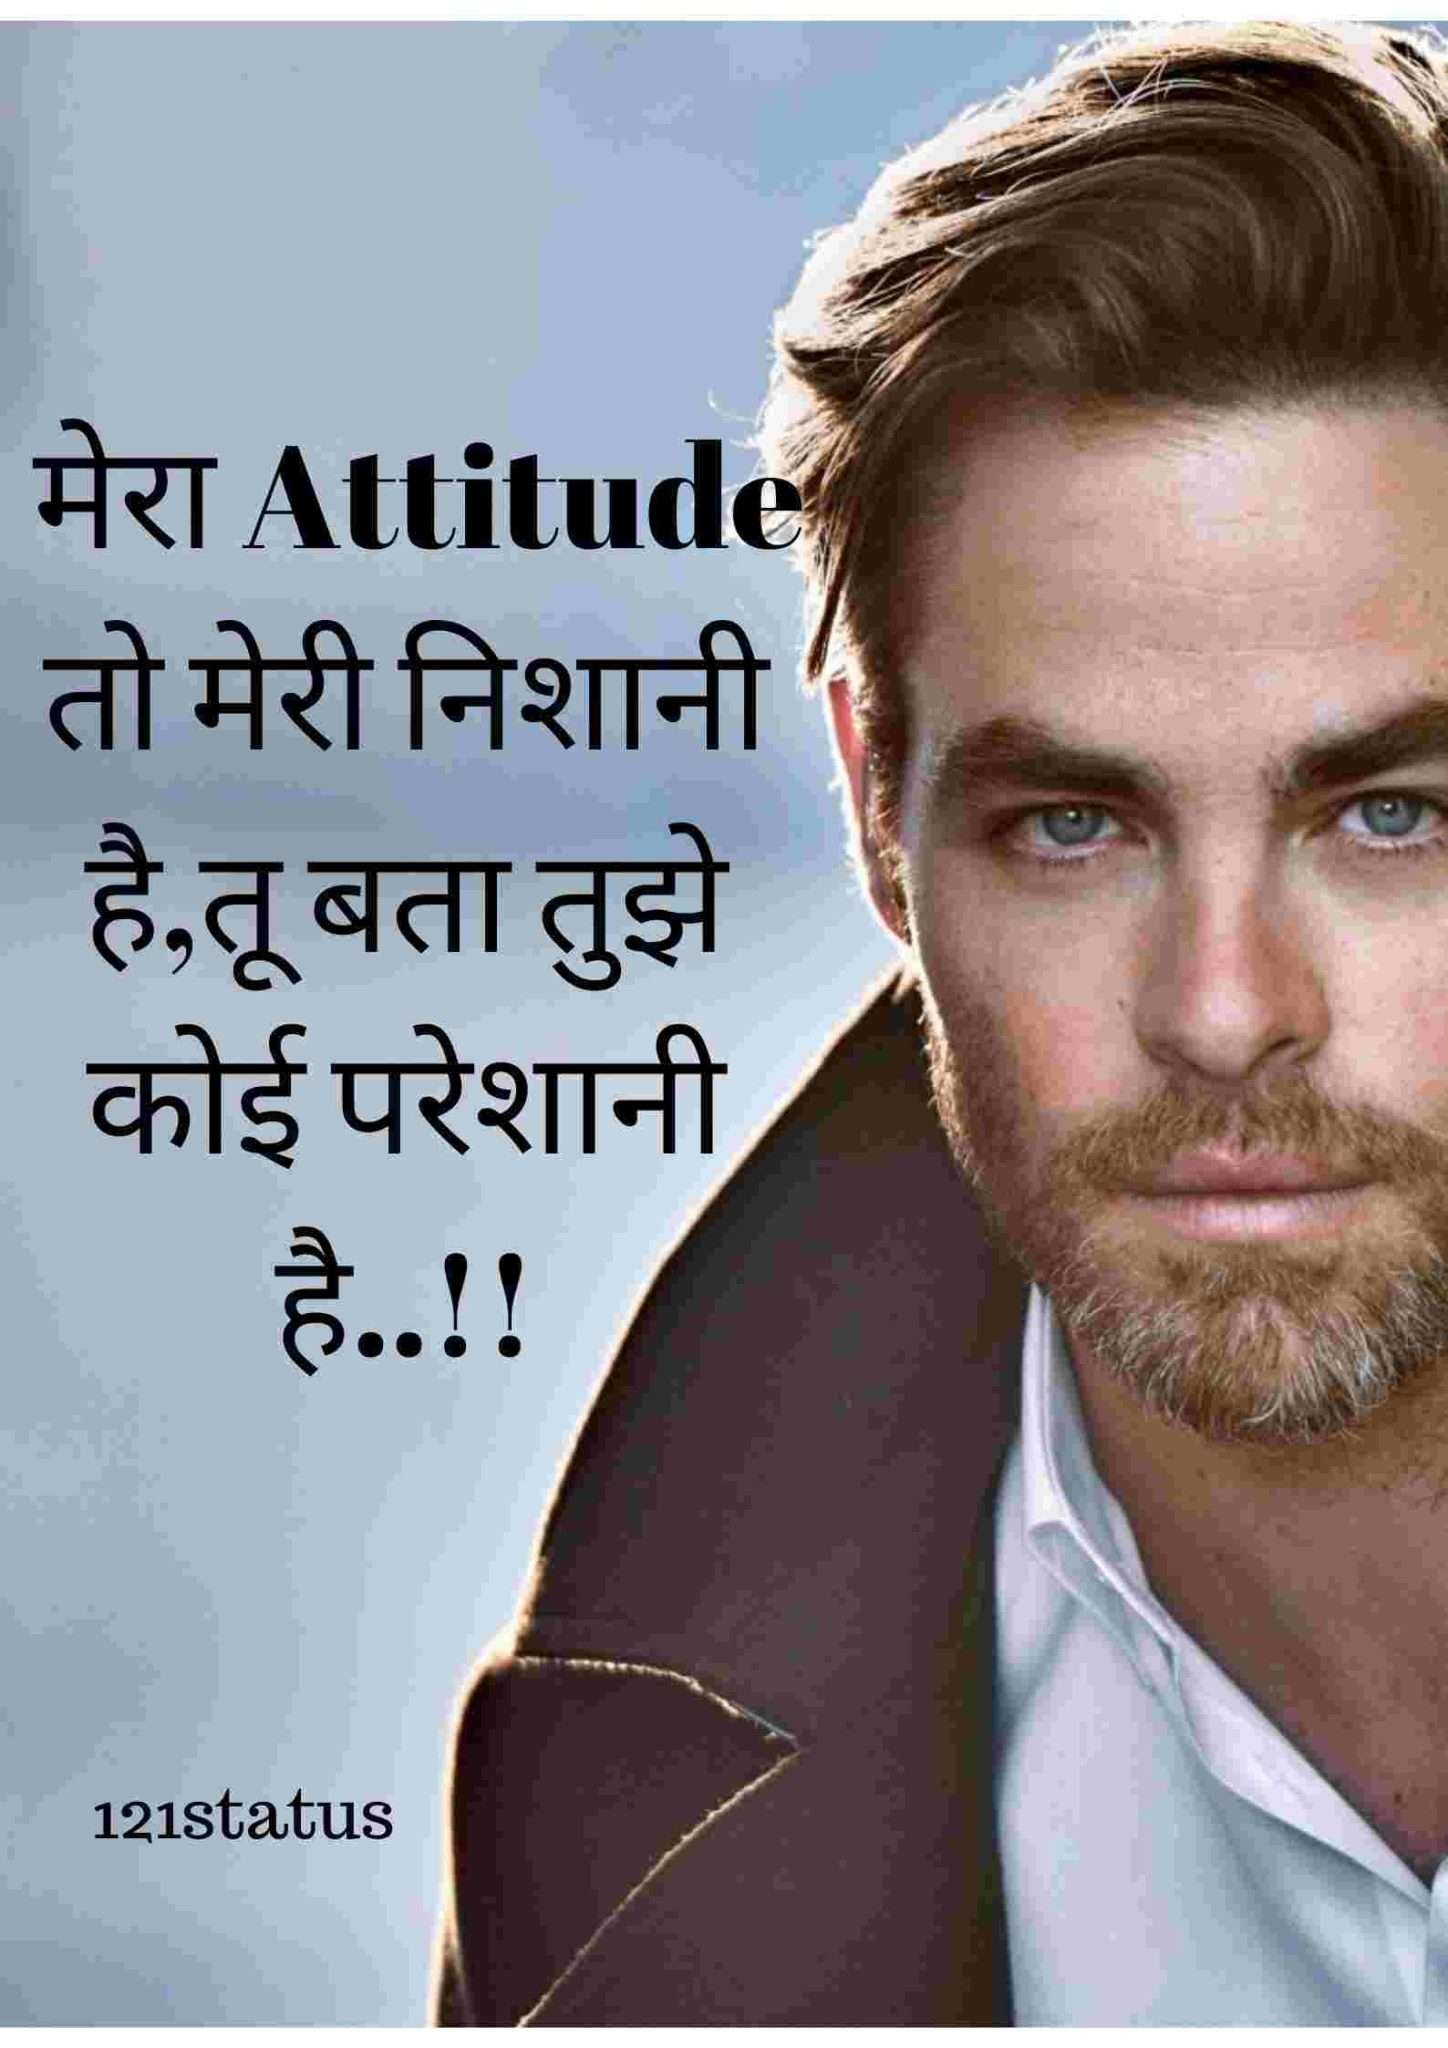 Royal Attitude Status in Hindi By multi-knowledge.com